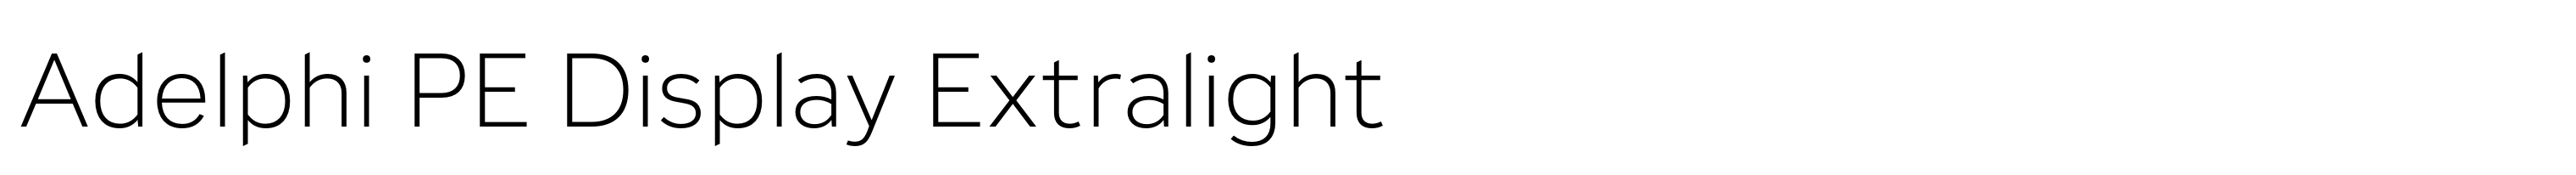 Adelphi PE Display Extralight